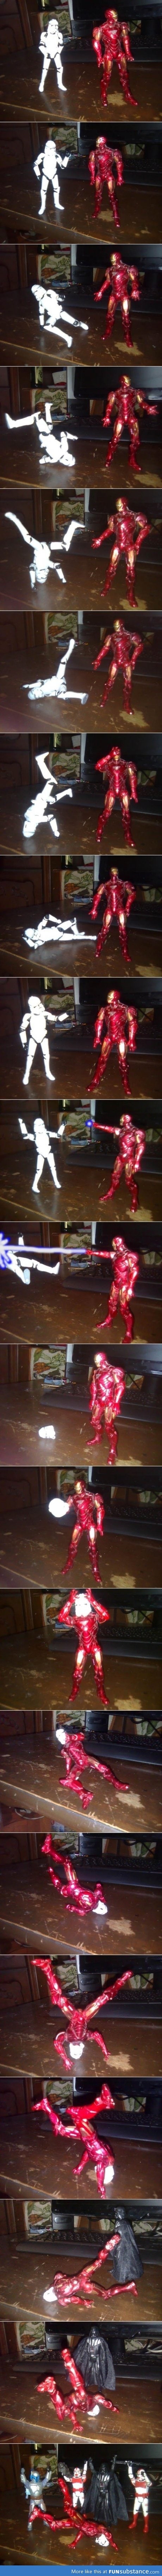 Iron Man break dancing